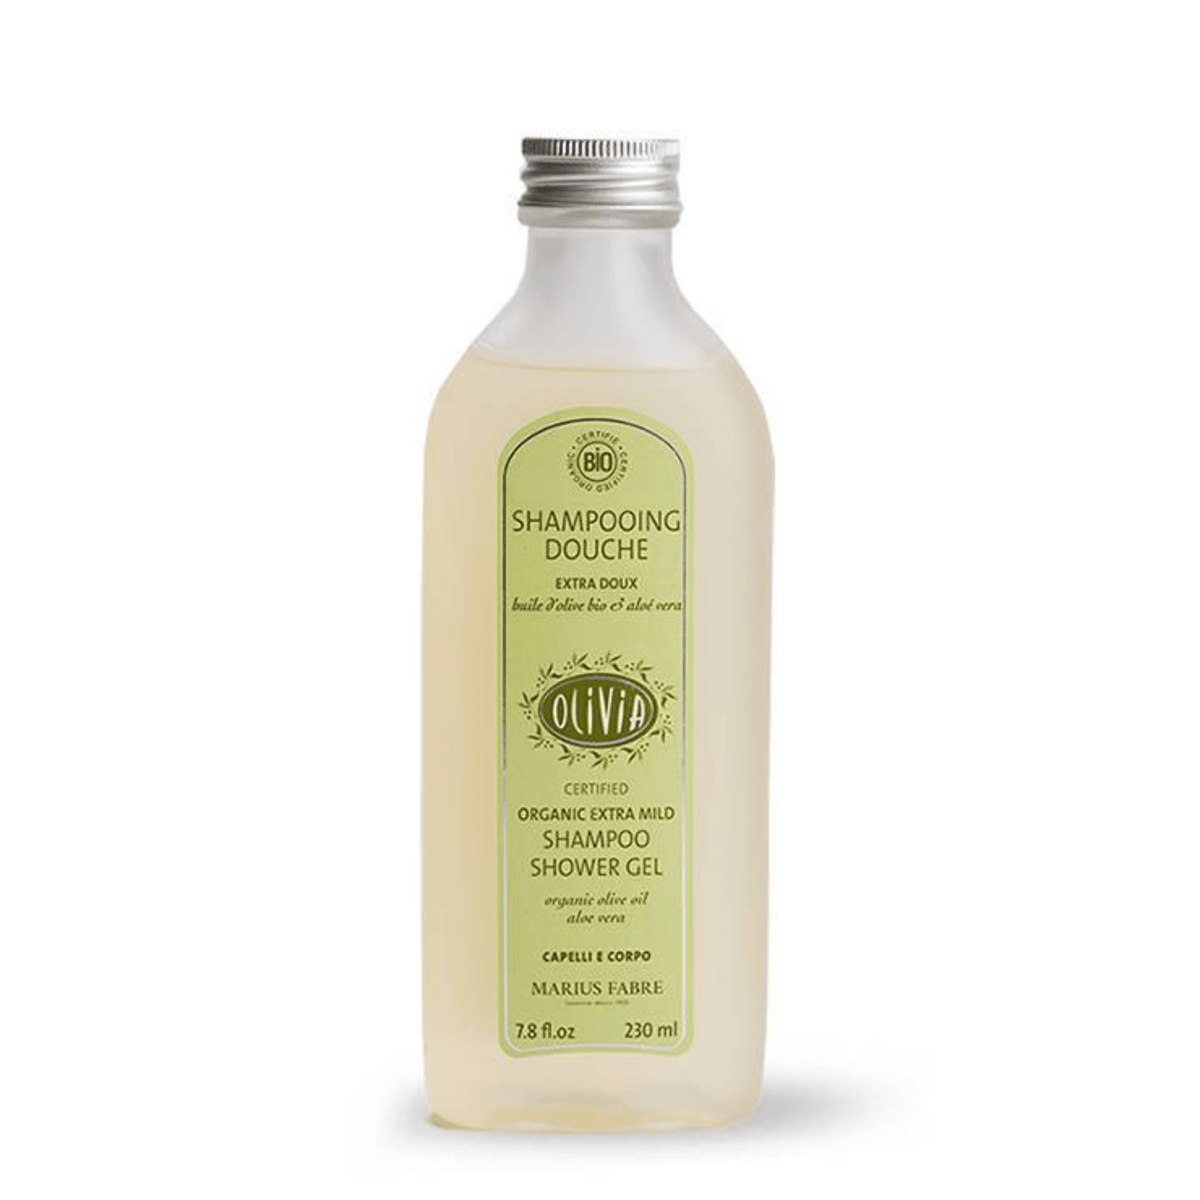 Primary Image of OLIVIA Organic Extra-Mild Shampoo and Shower Gel